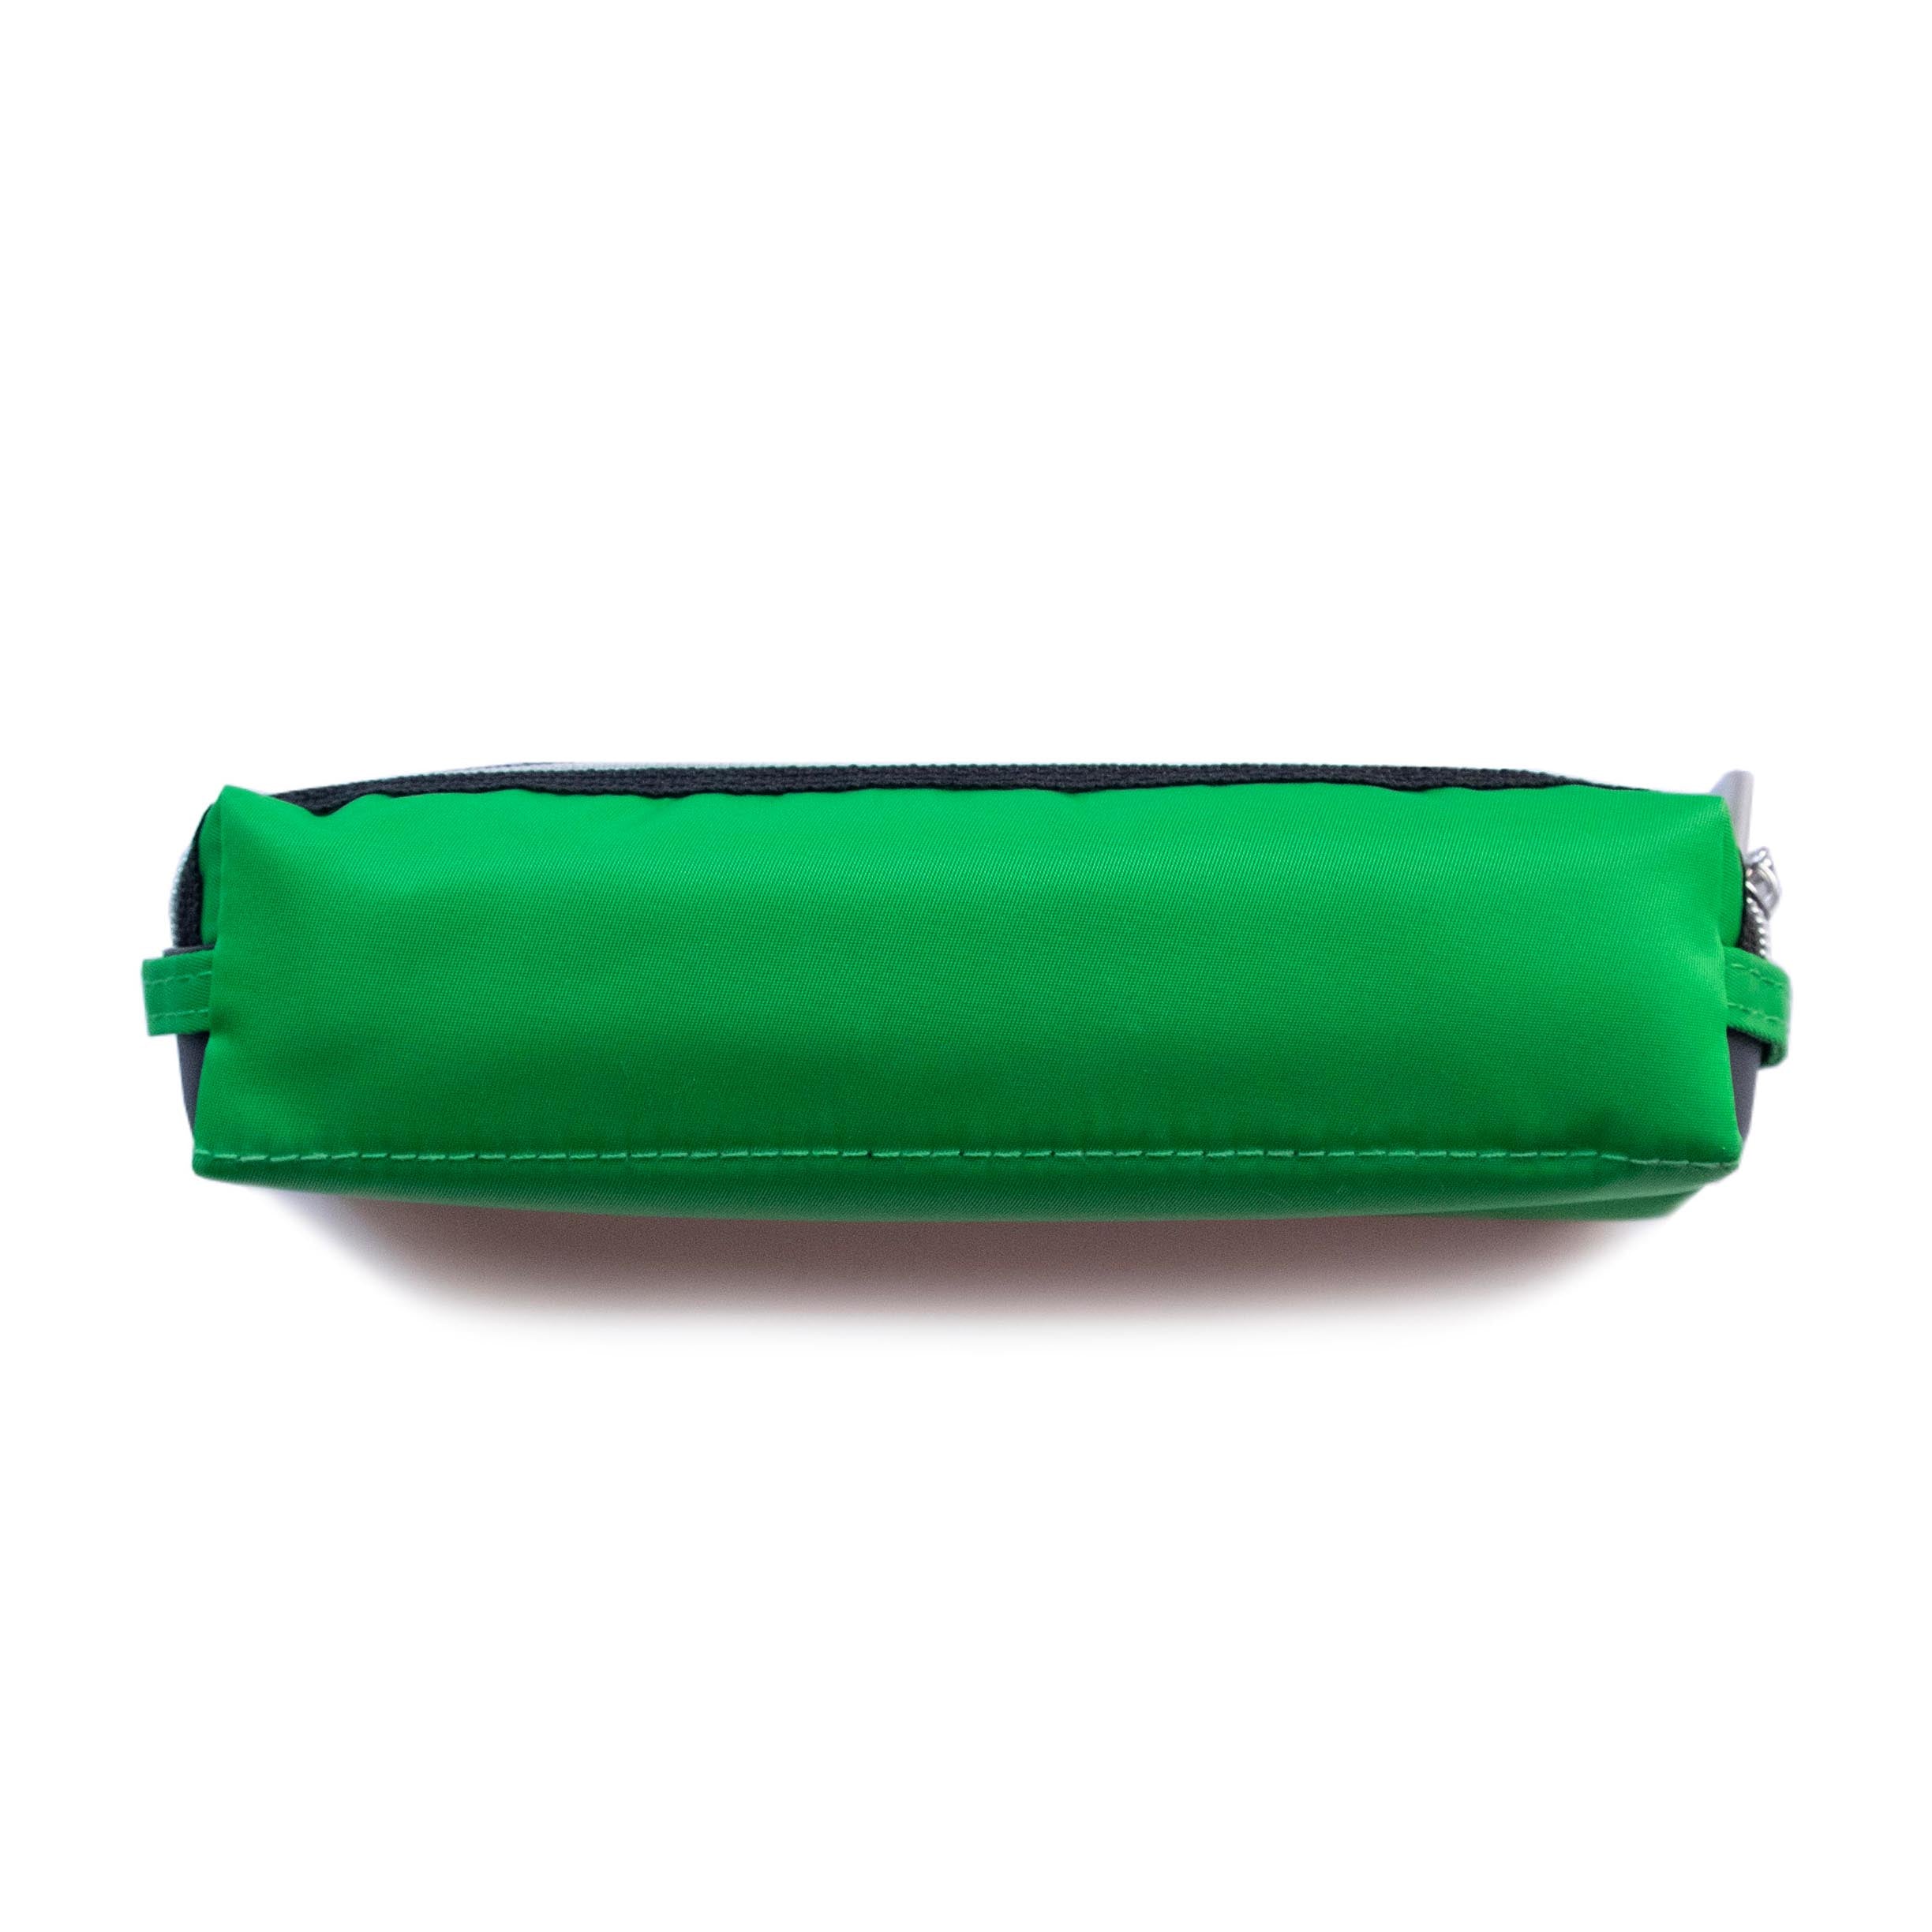 ArtSnacks Green Pencil Case